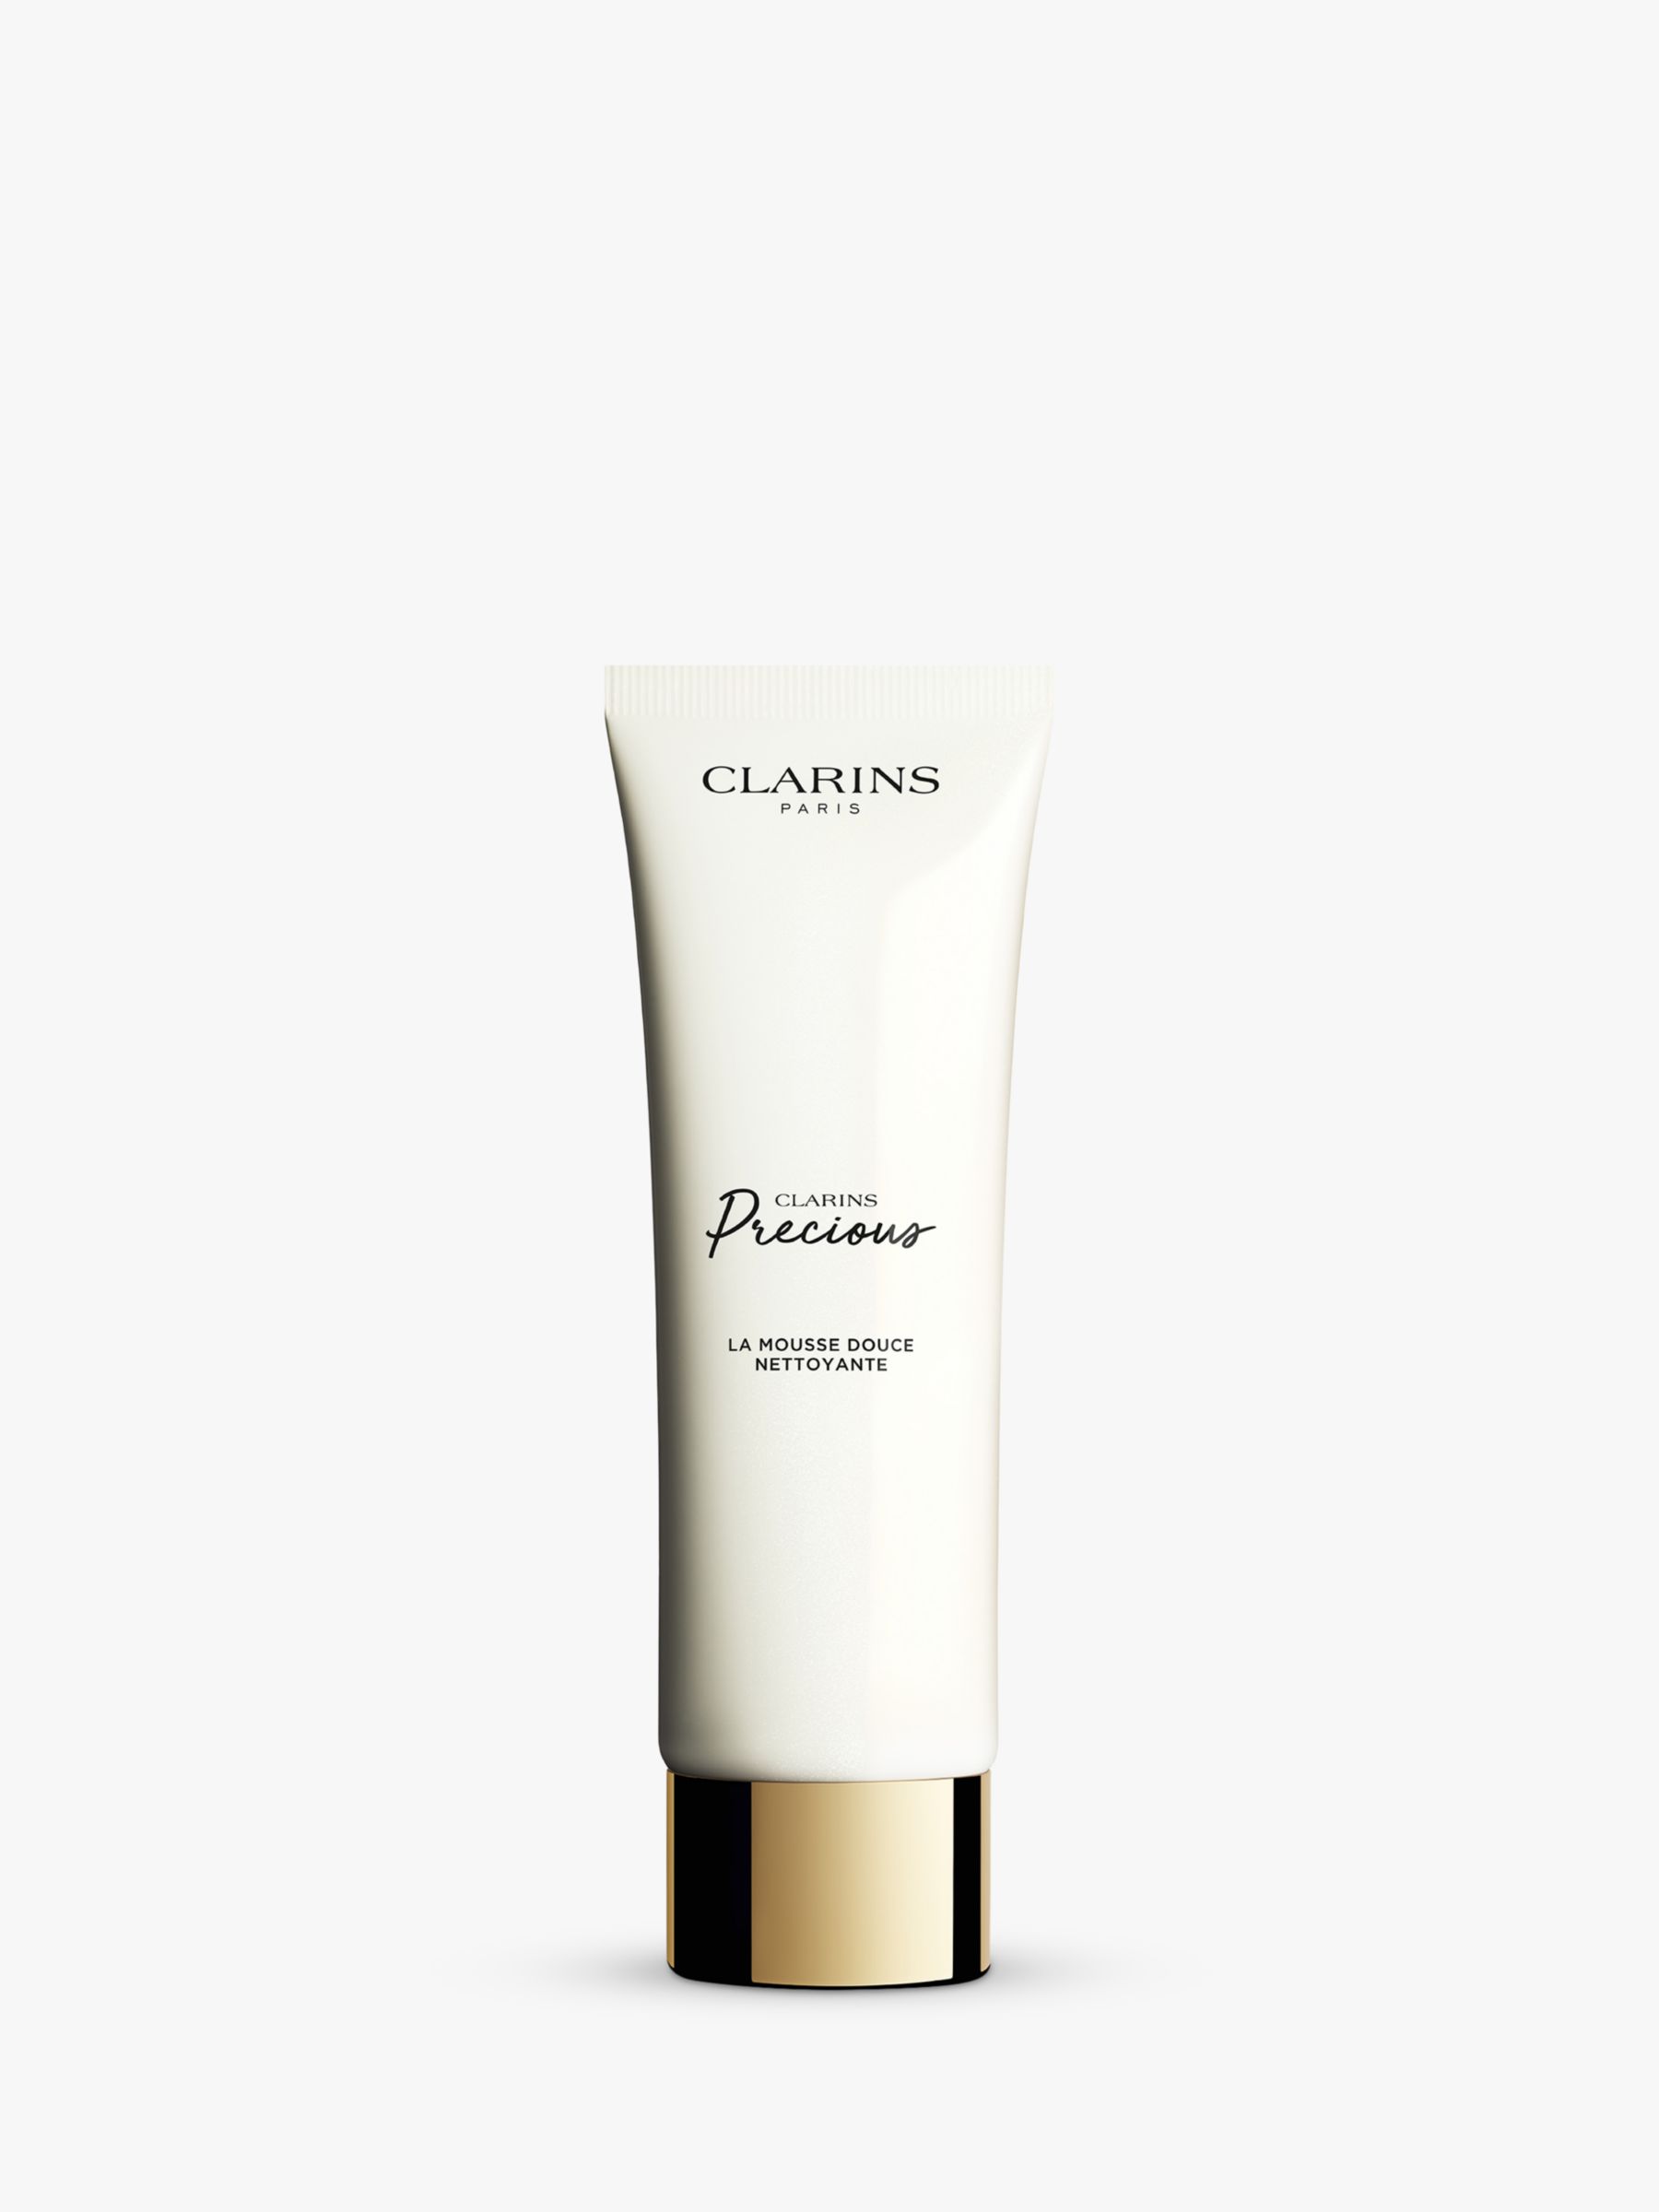 Clarins Precious La Mousse Luxury Foaming Face Cleanser, 125ml